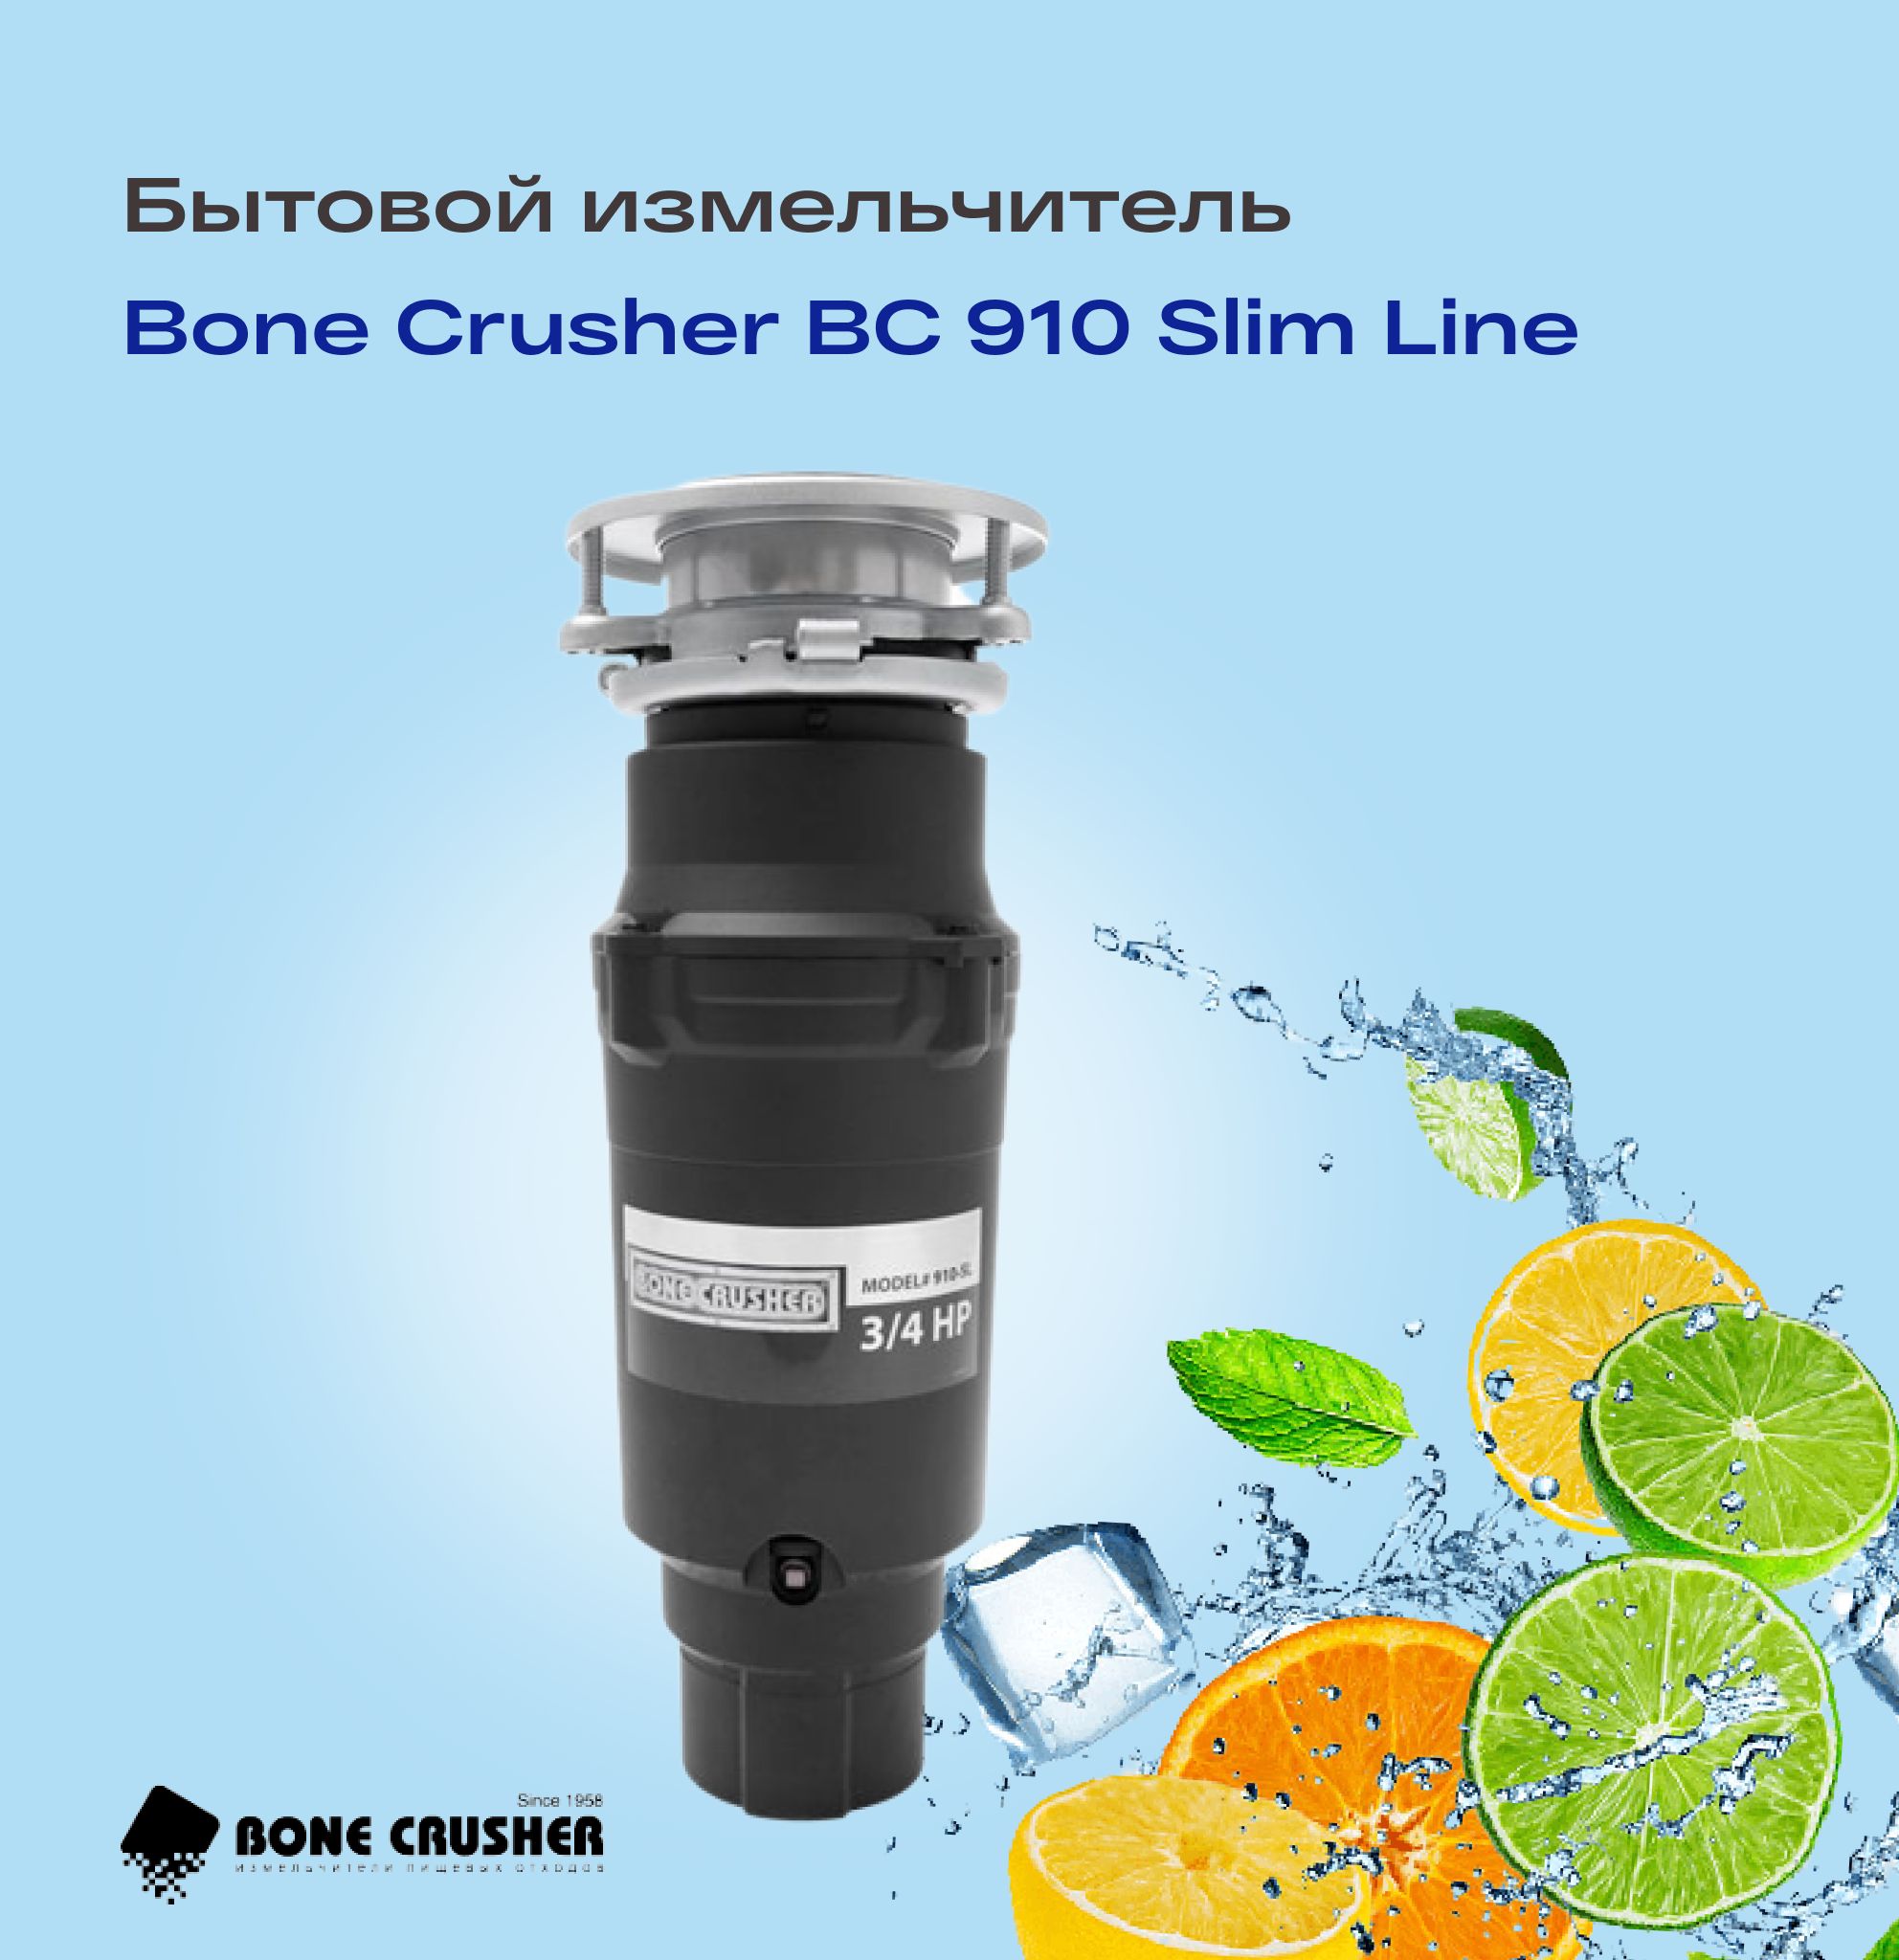 Bone crusher 810 slim line